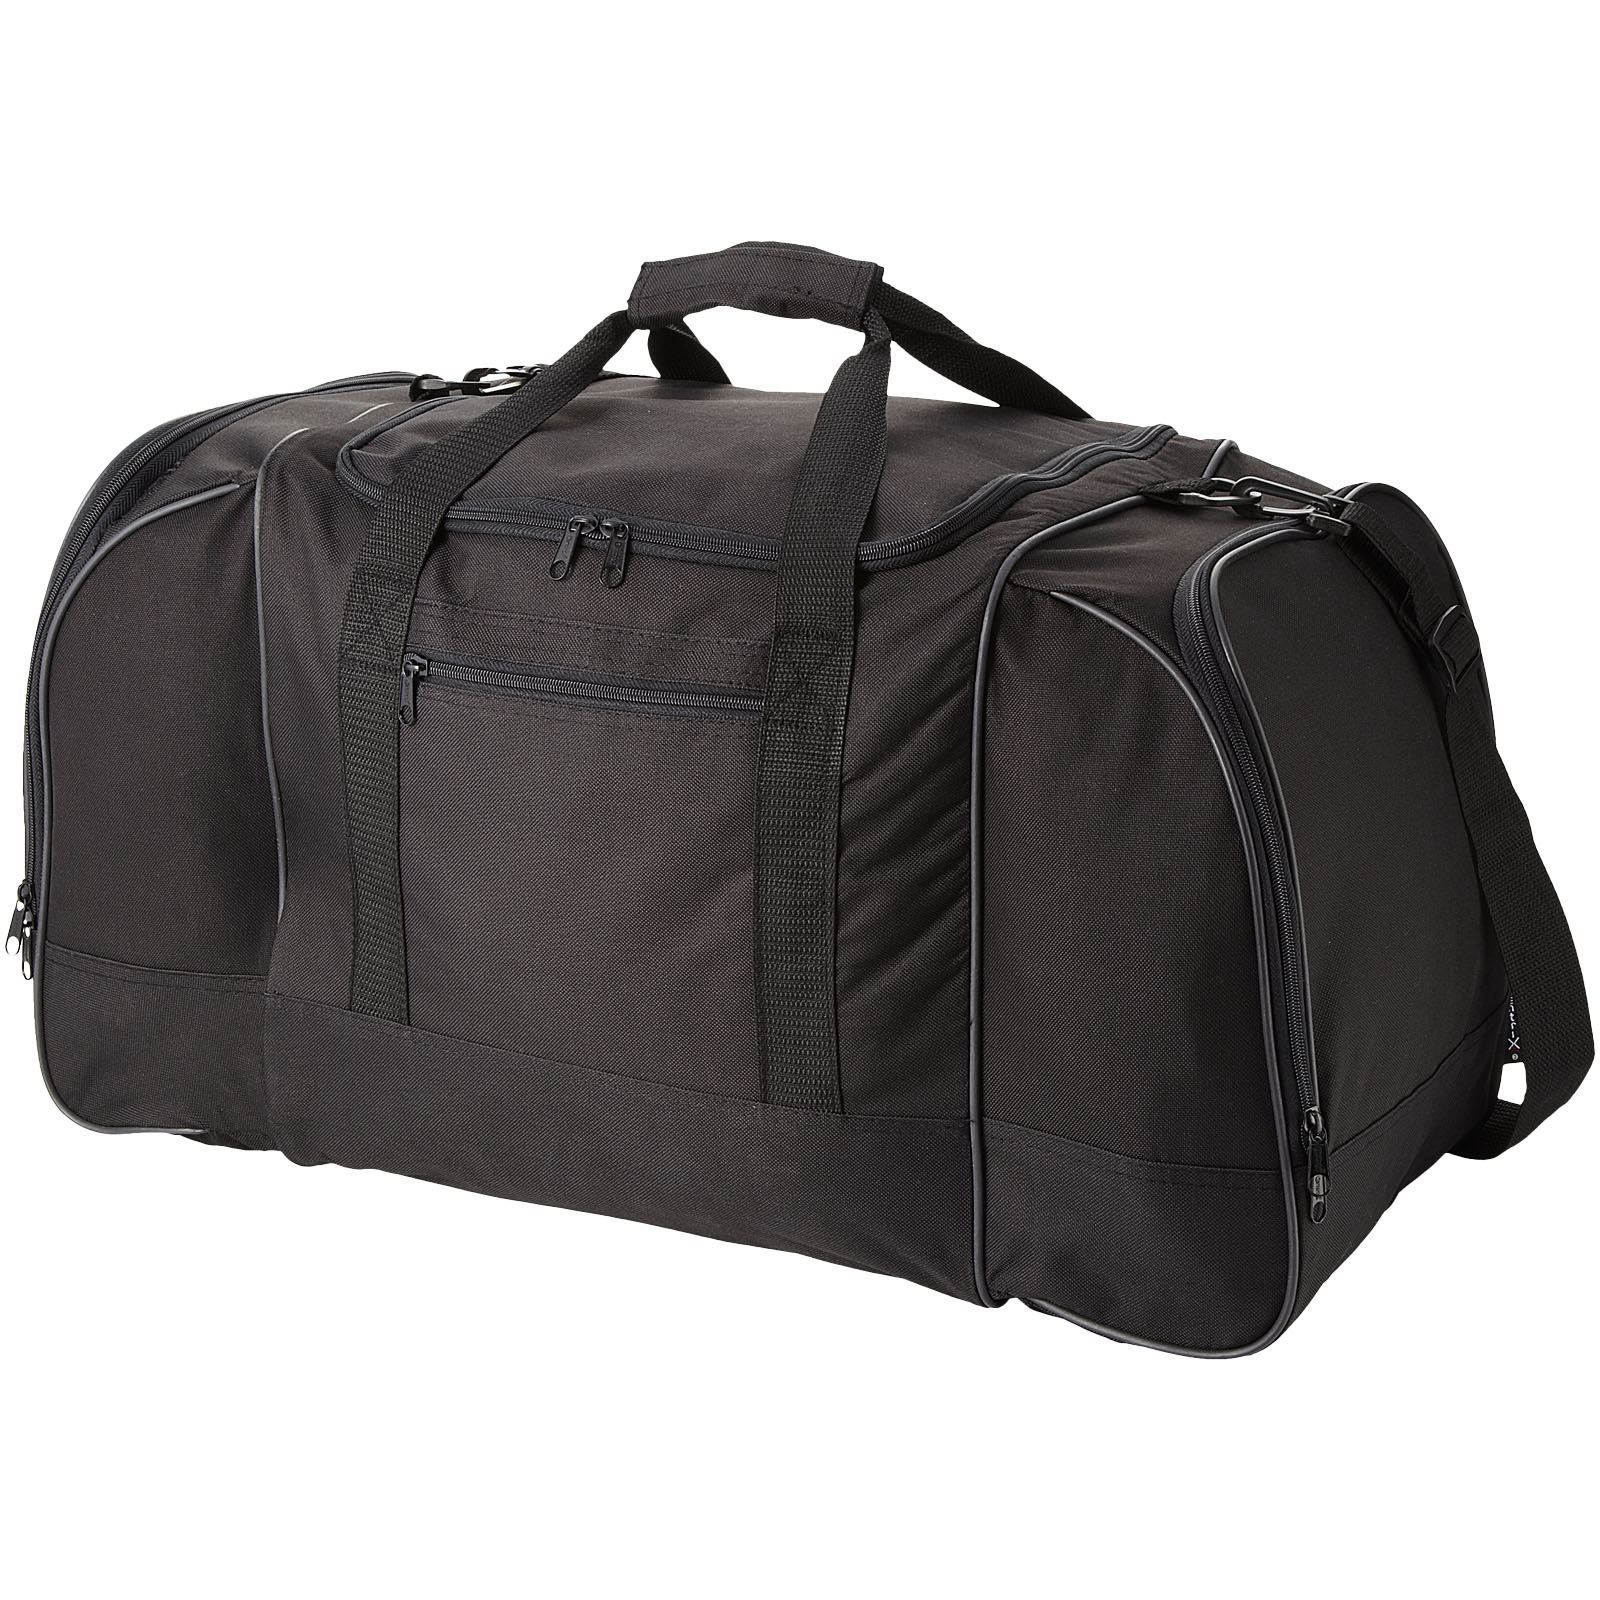 Travel bags - Nevada travel duffel bag 30L